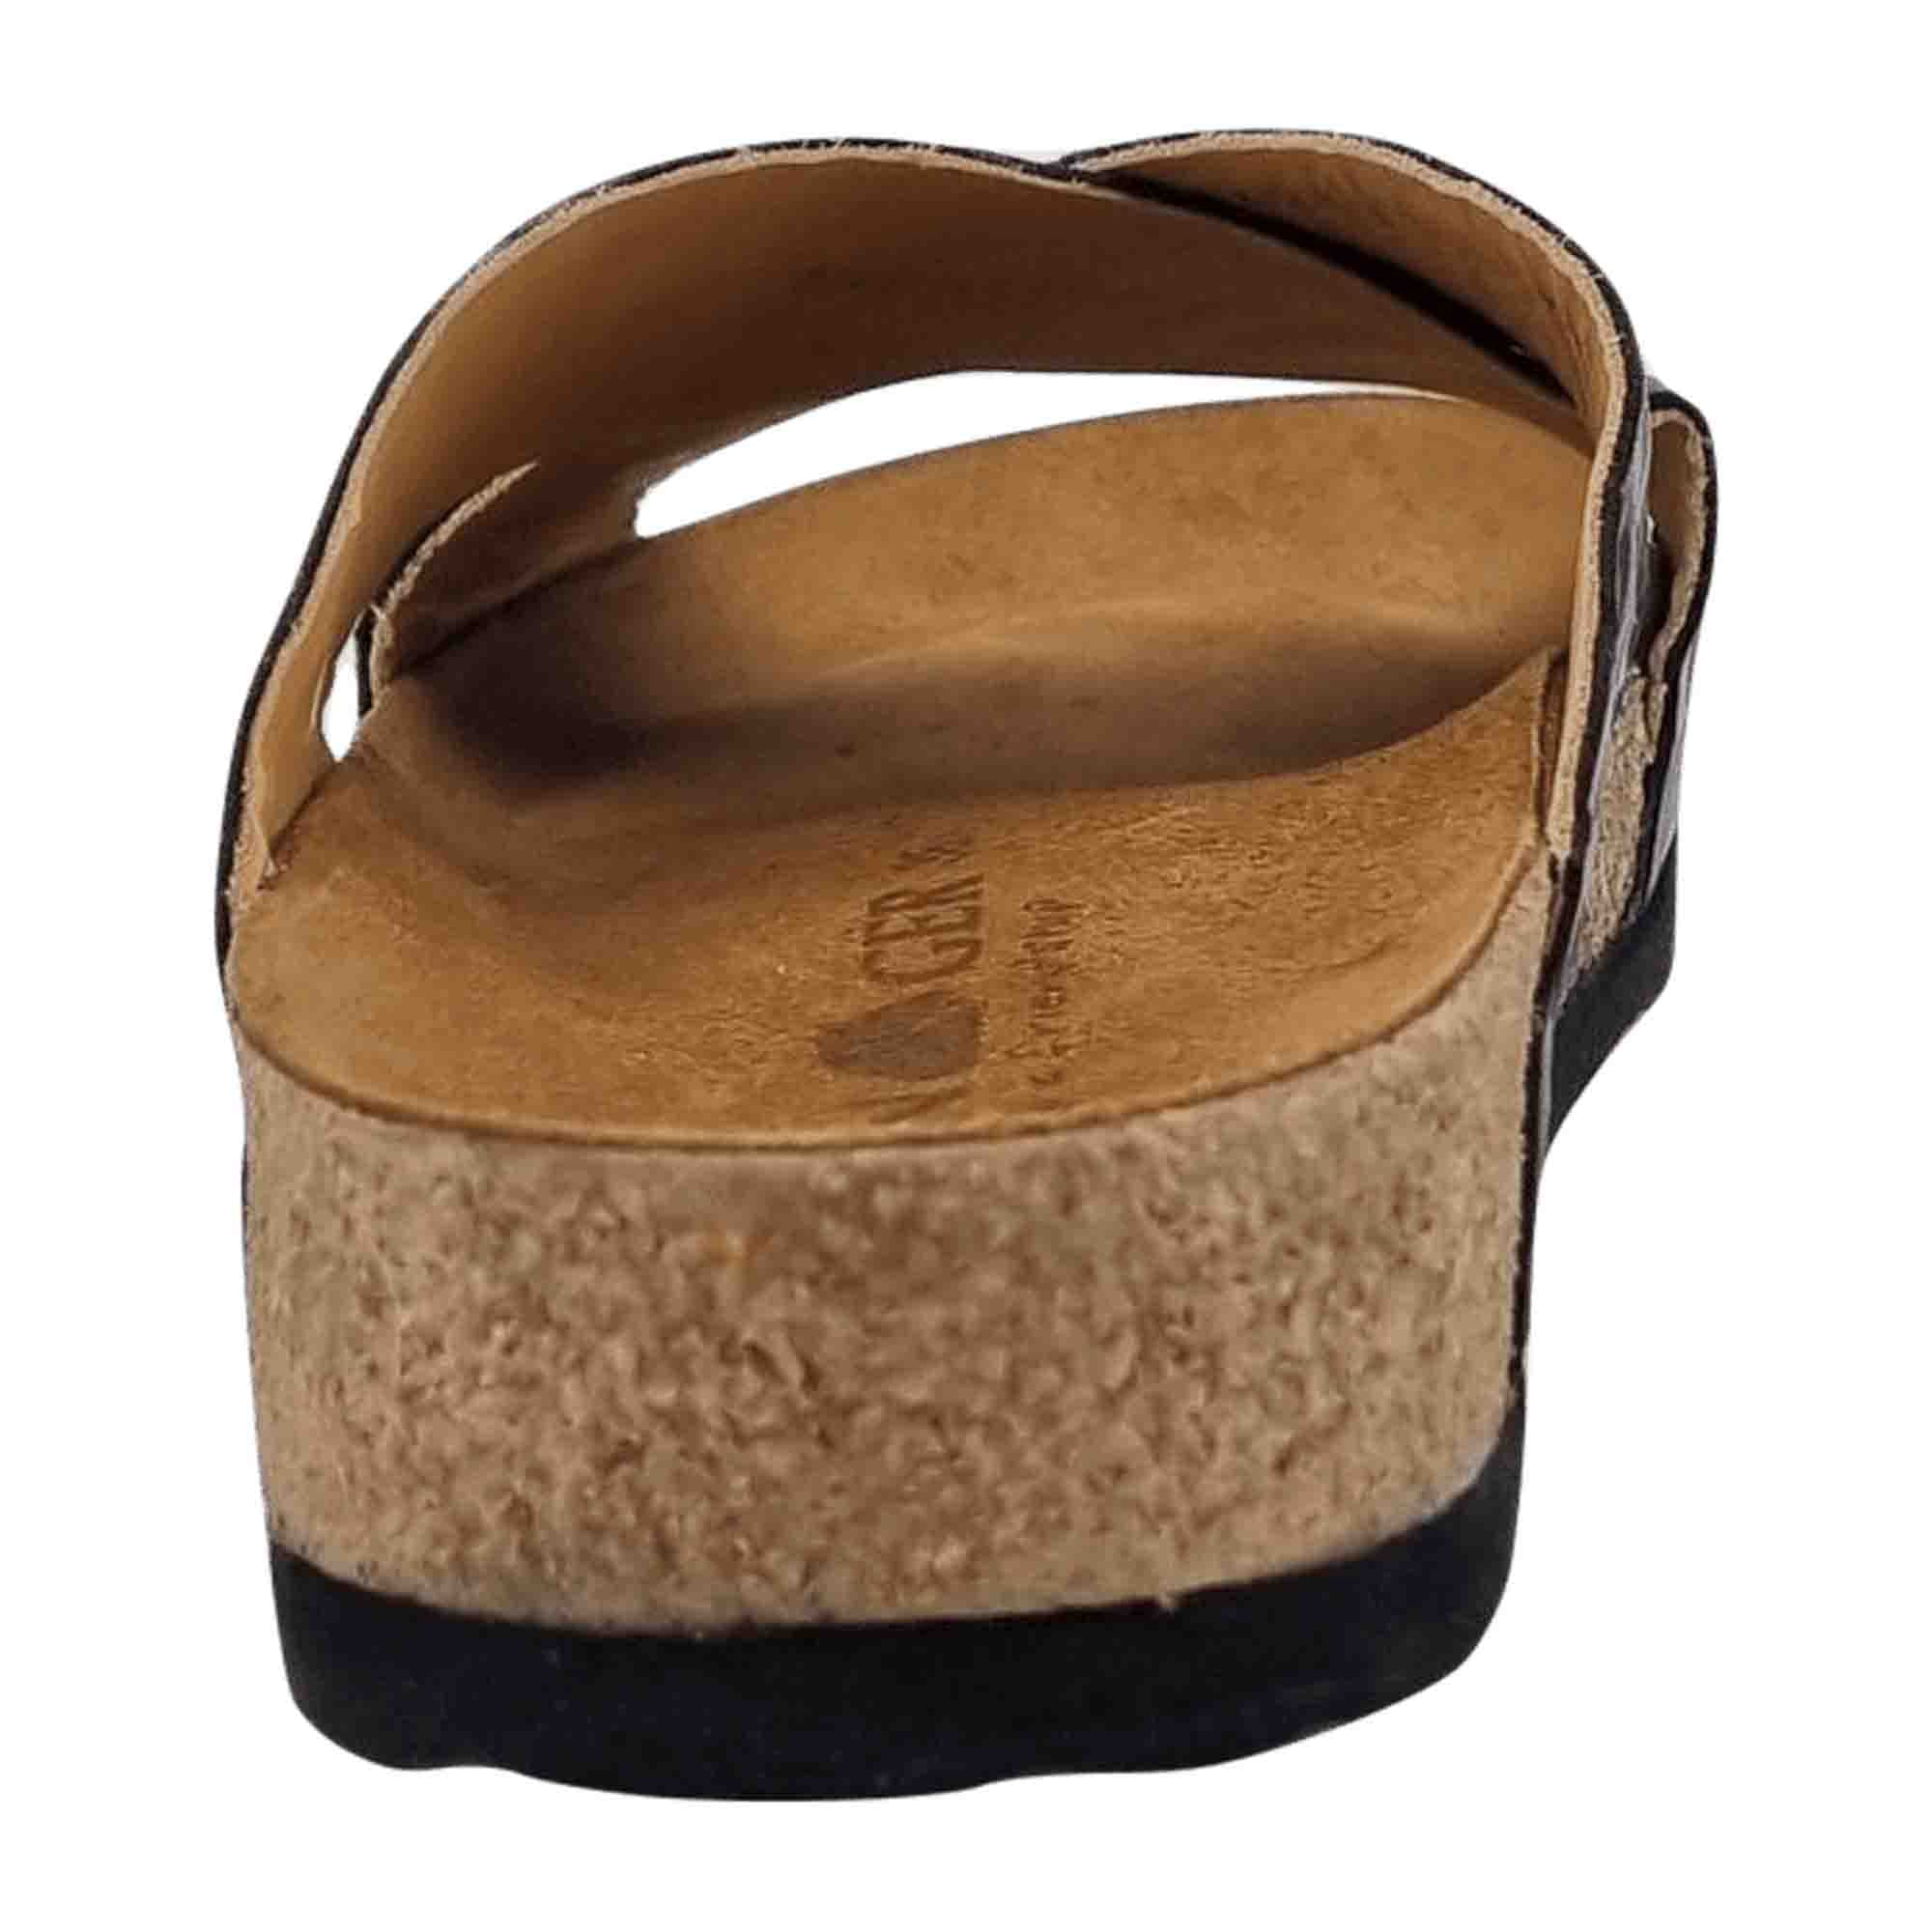 Haflinger Bio Mio Women's Sandals - Black Leather, EU Size 37 - Stylish & Durable